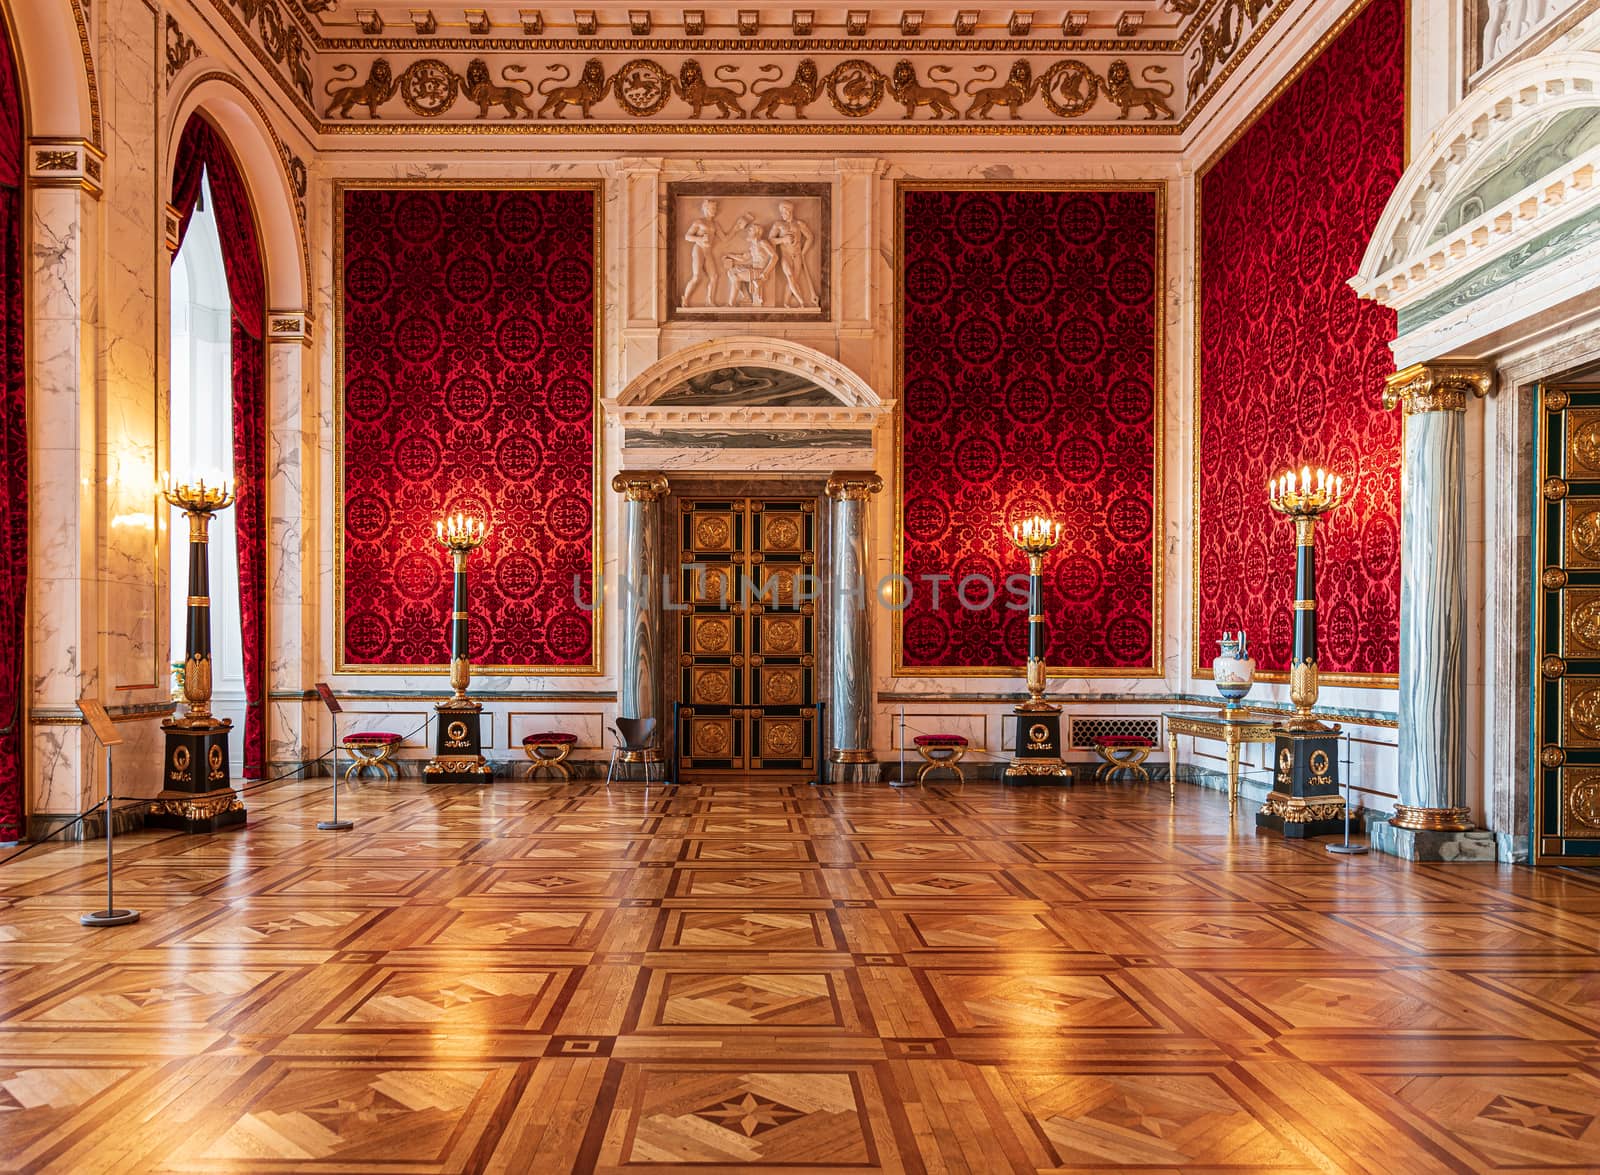 Interiors of royal halls in Christiansborg Palace in Copenhagen, by brambillasimone